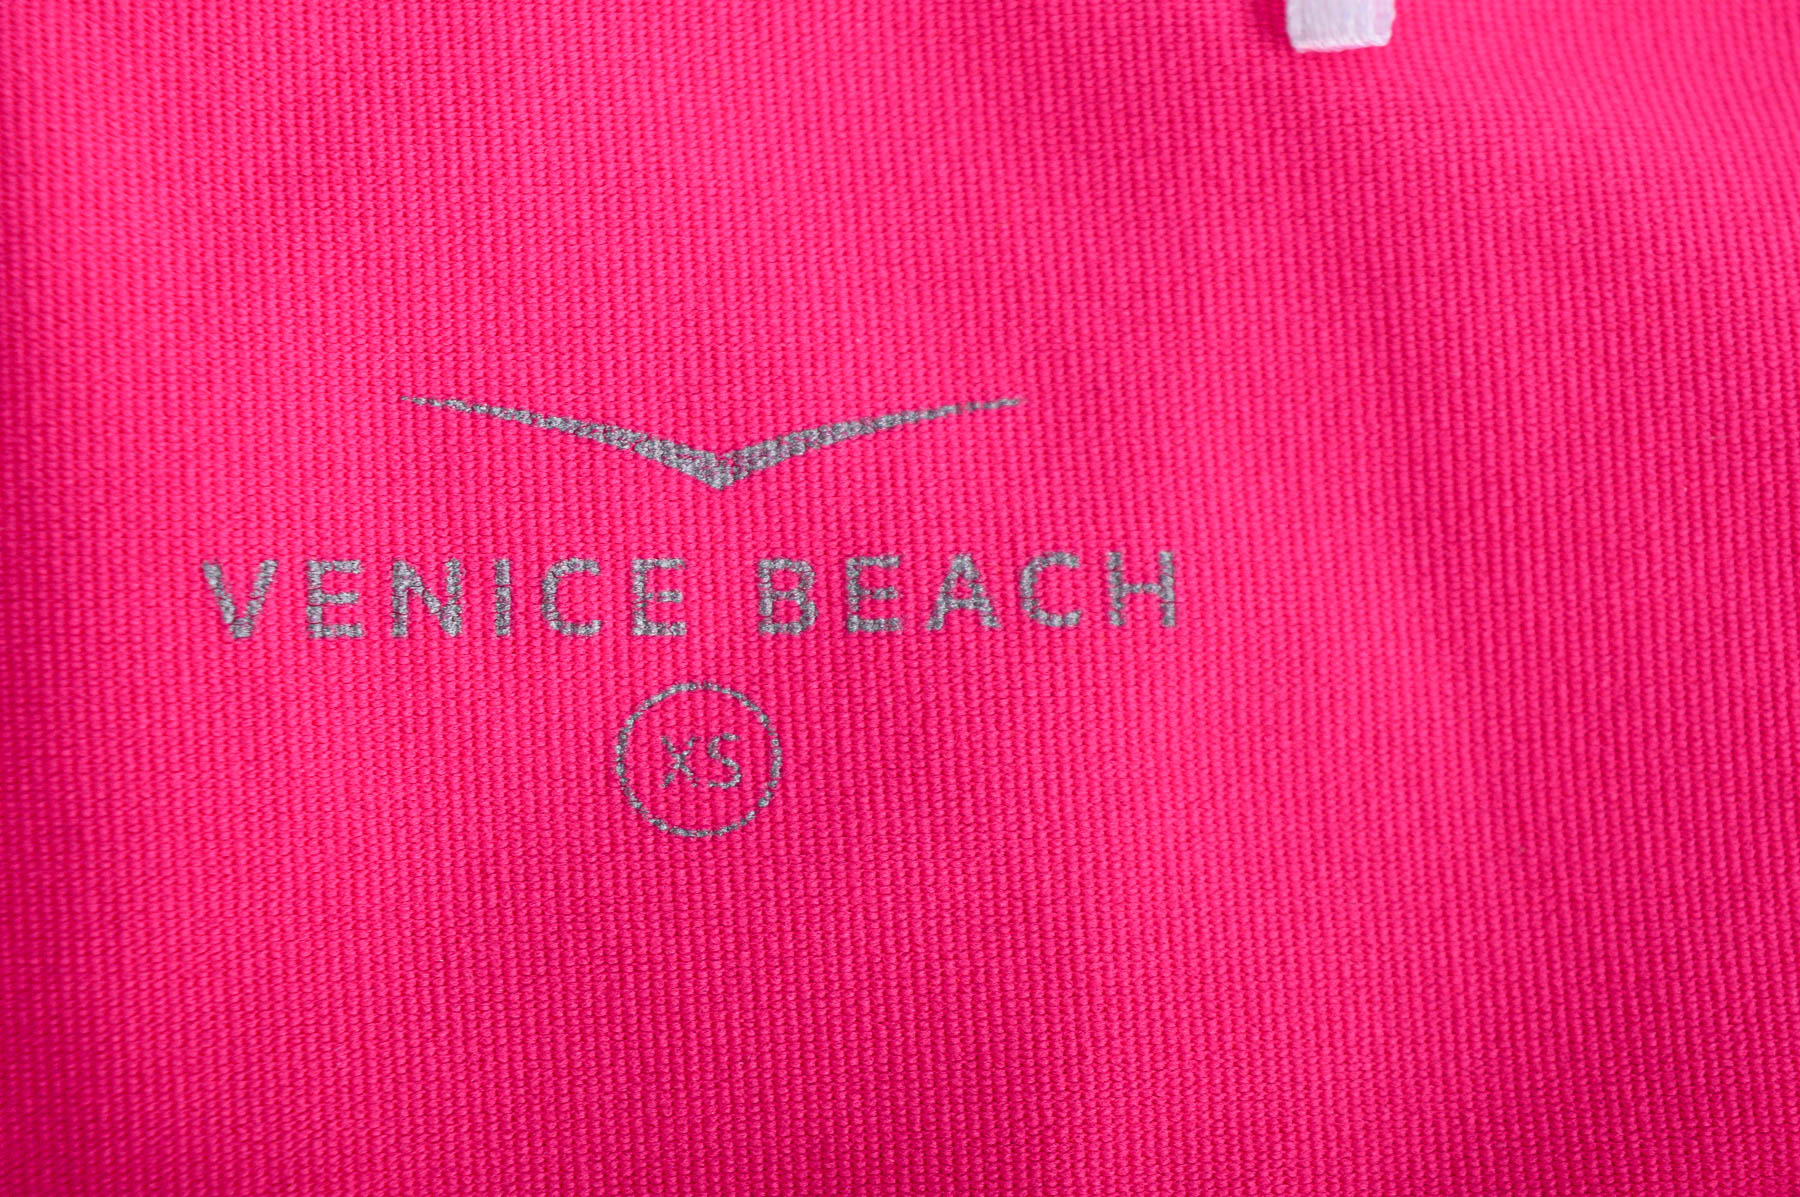 Дамска тениска - Venice Beach - 2